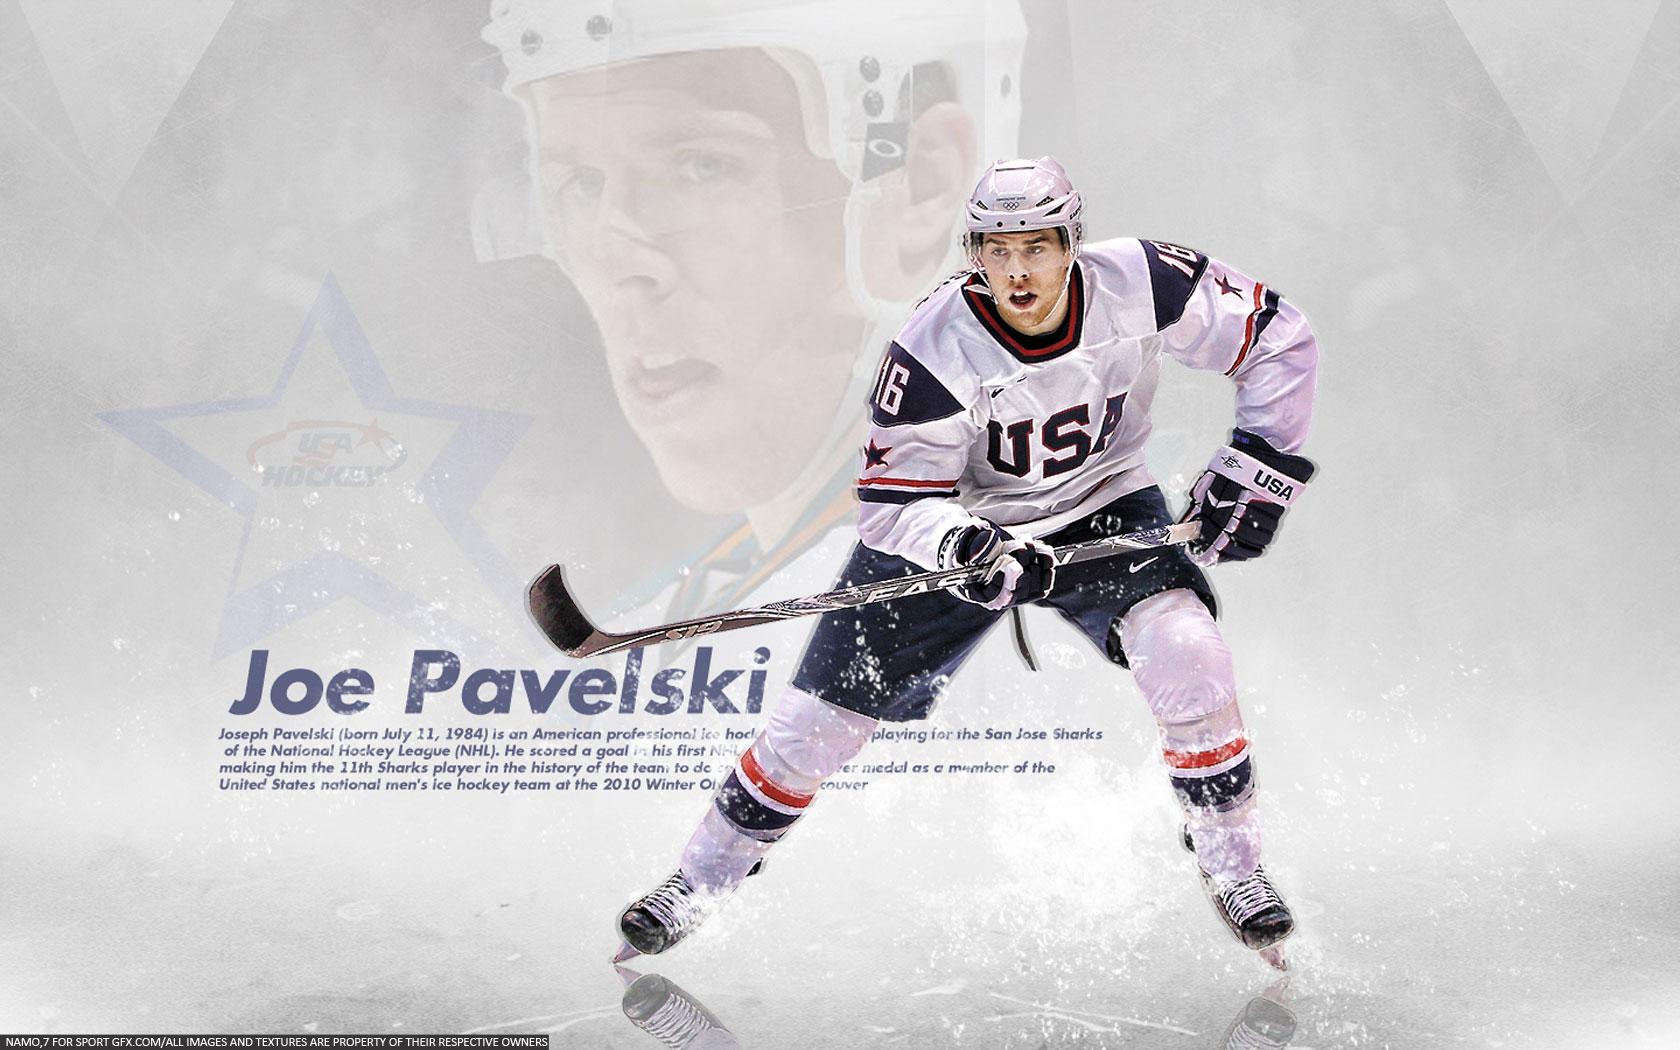 1680x1050px Team USA Hockey Wallpaper